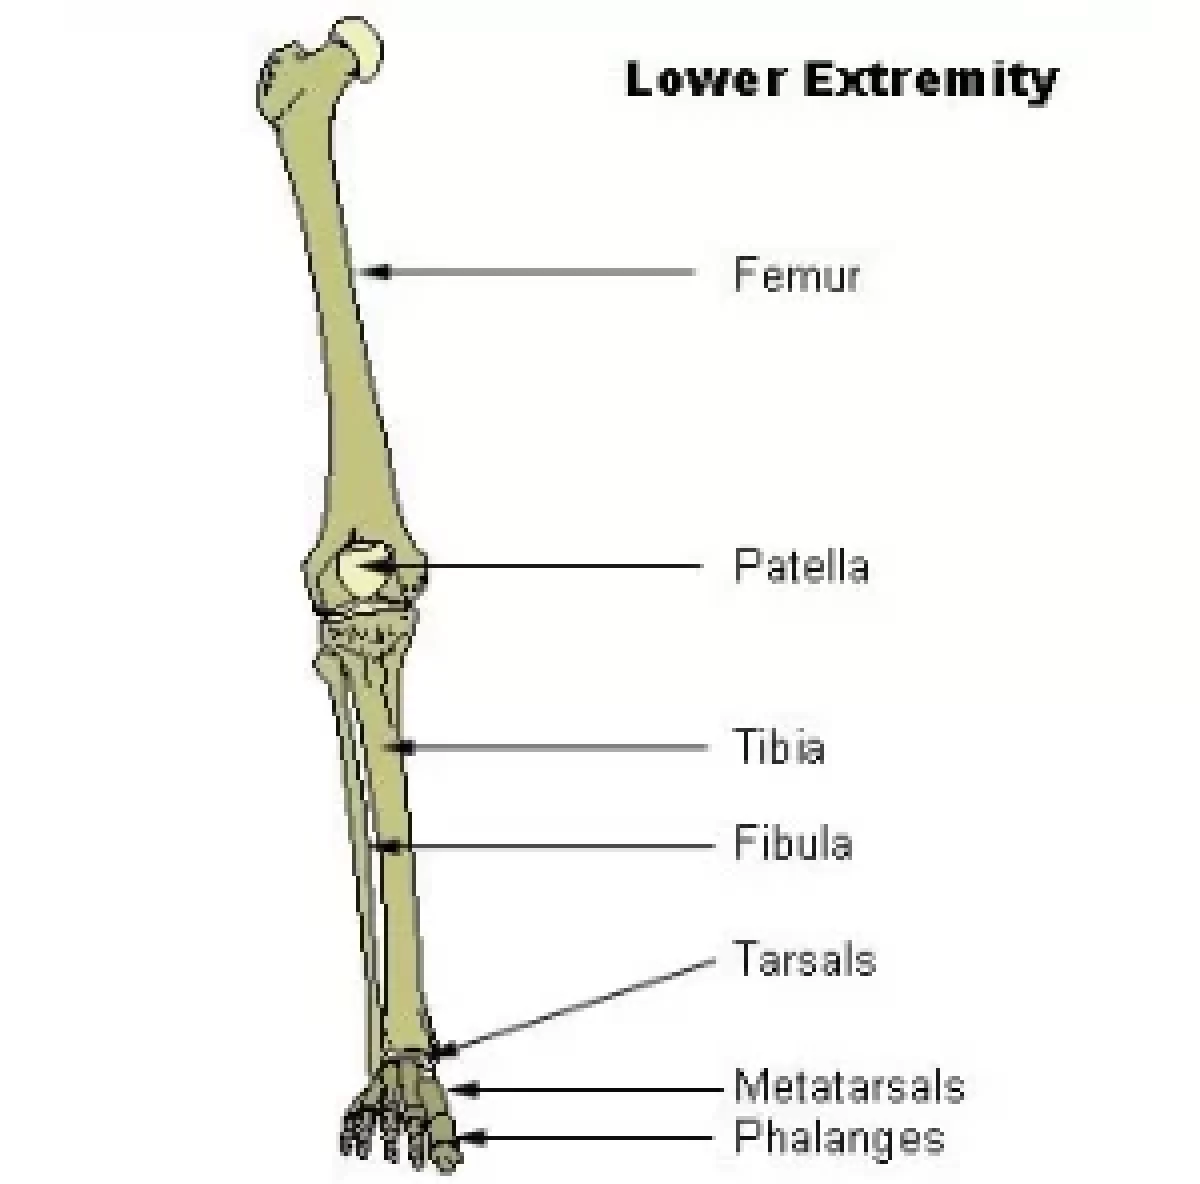 tibia and fibula bones